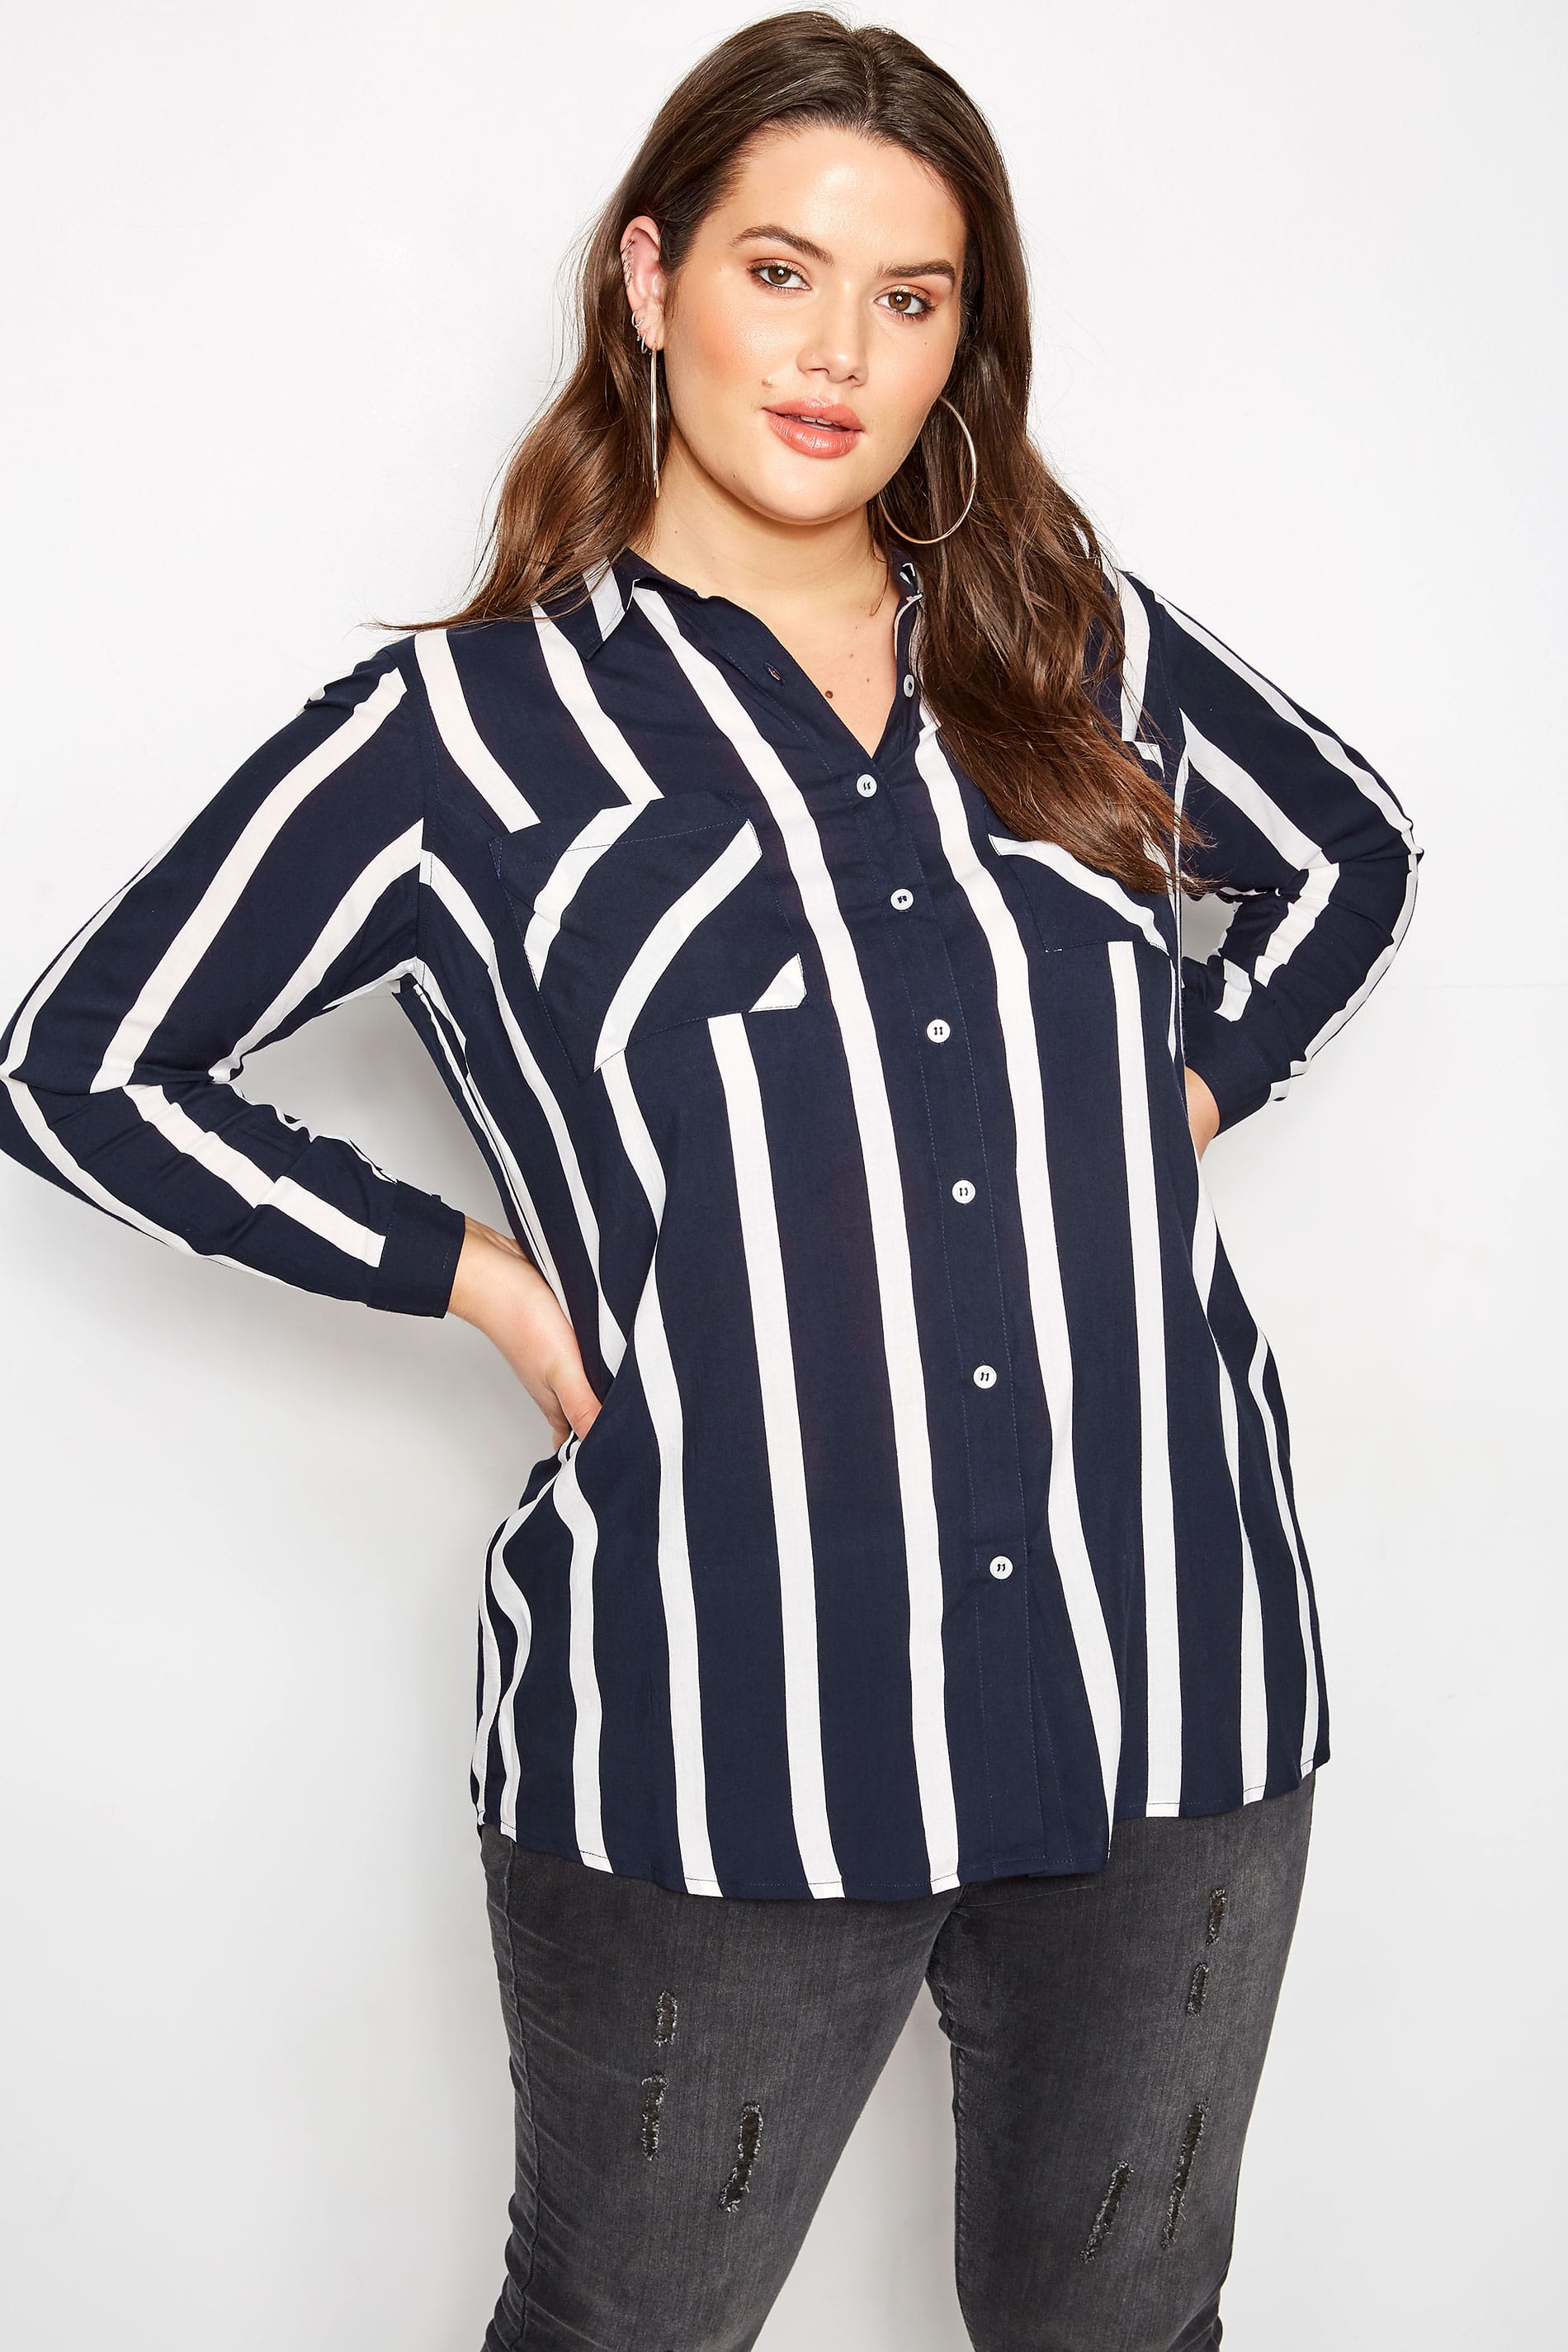 Plus Size Navy Stripe Shirt | Sizes 16 to 36 | Yours Clothing